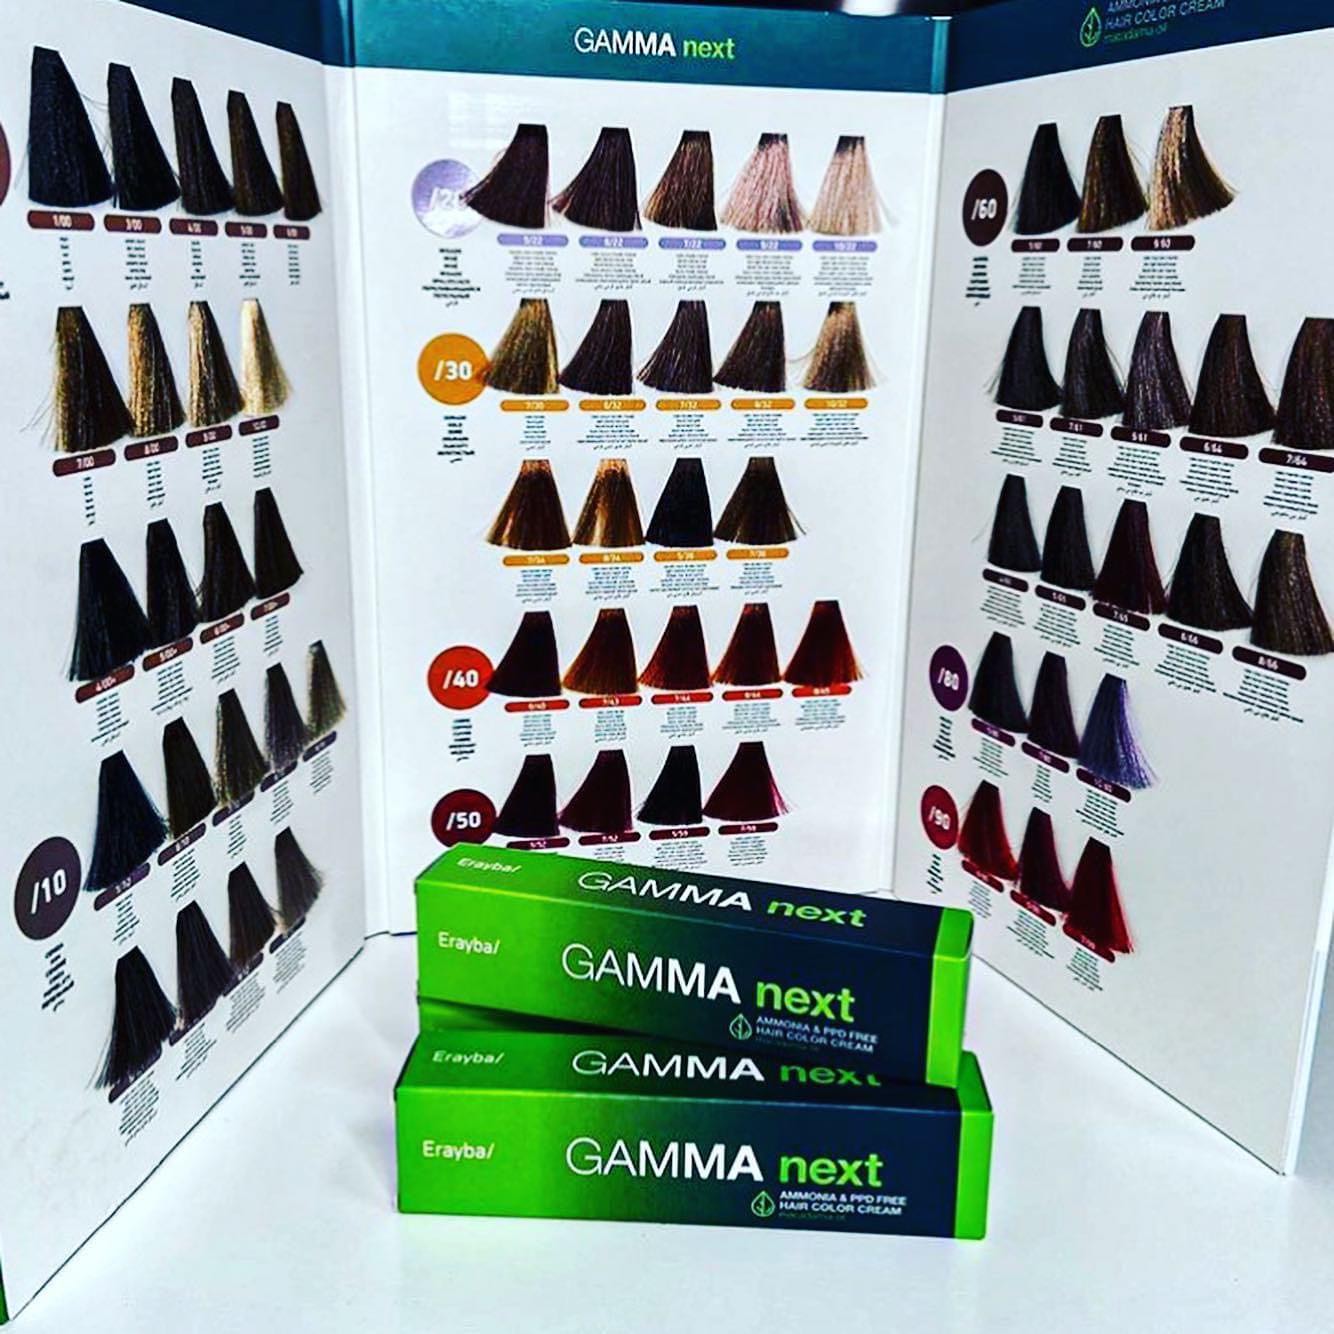 Gamma NEXT Ammonia & PPD Free Hair Color Cream - 5/12 Light Brown Irise Ash